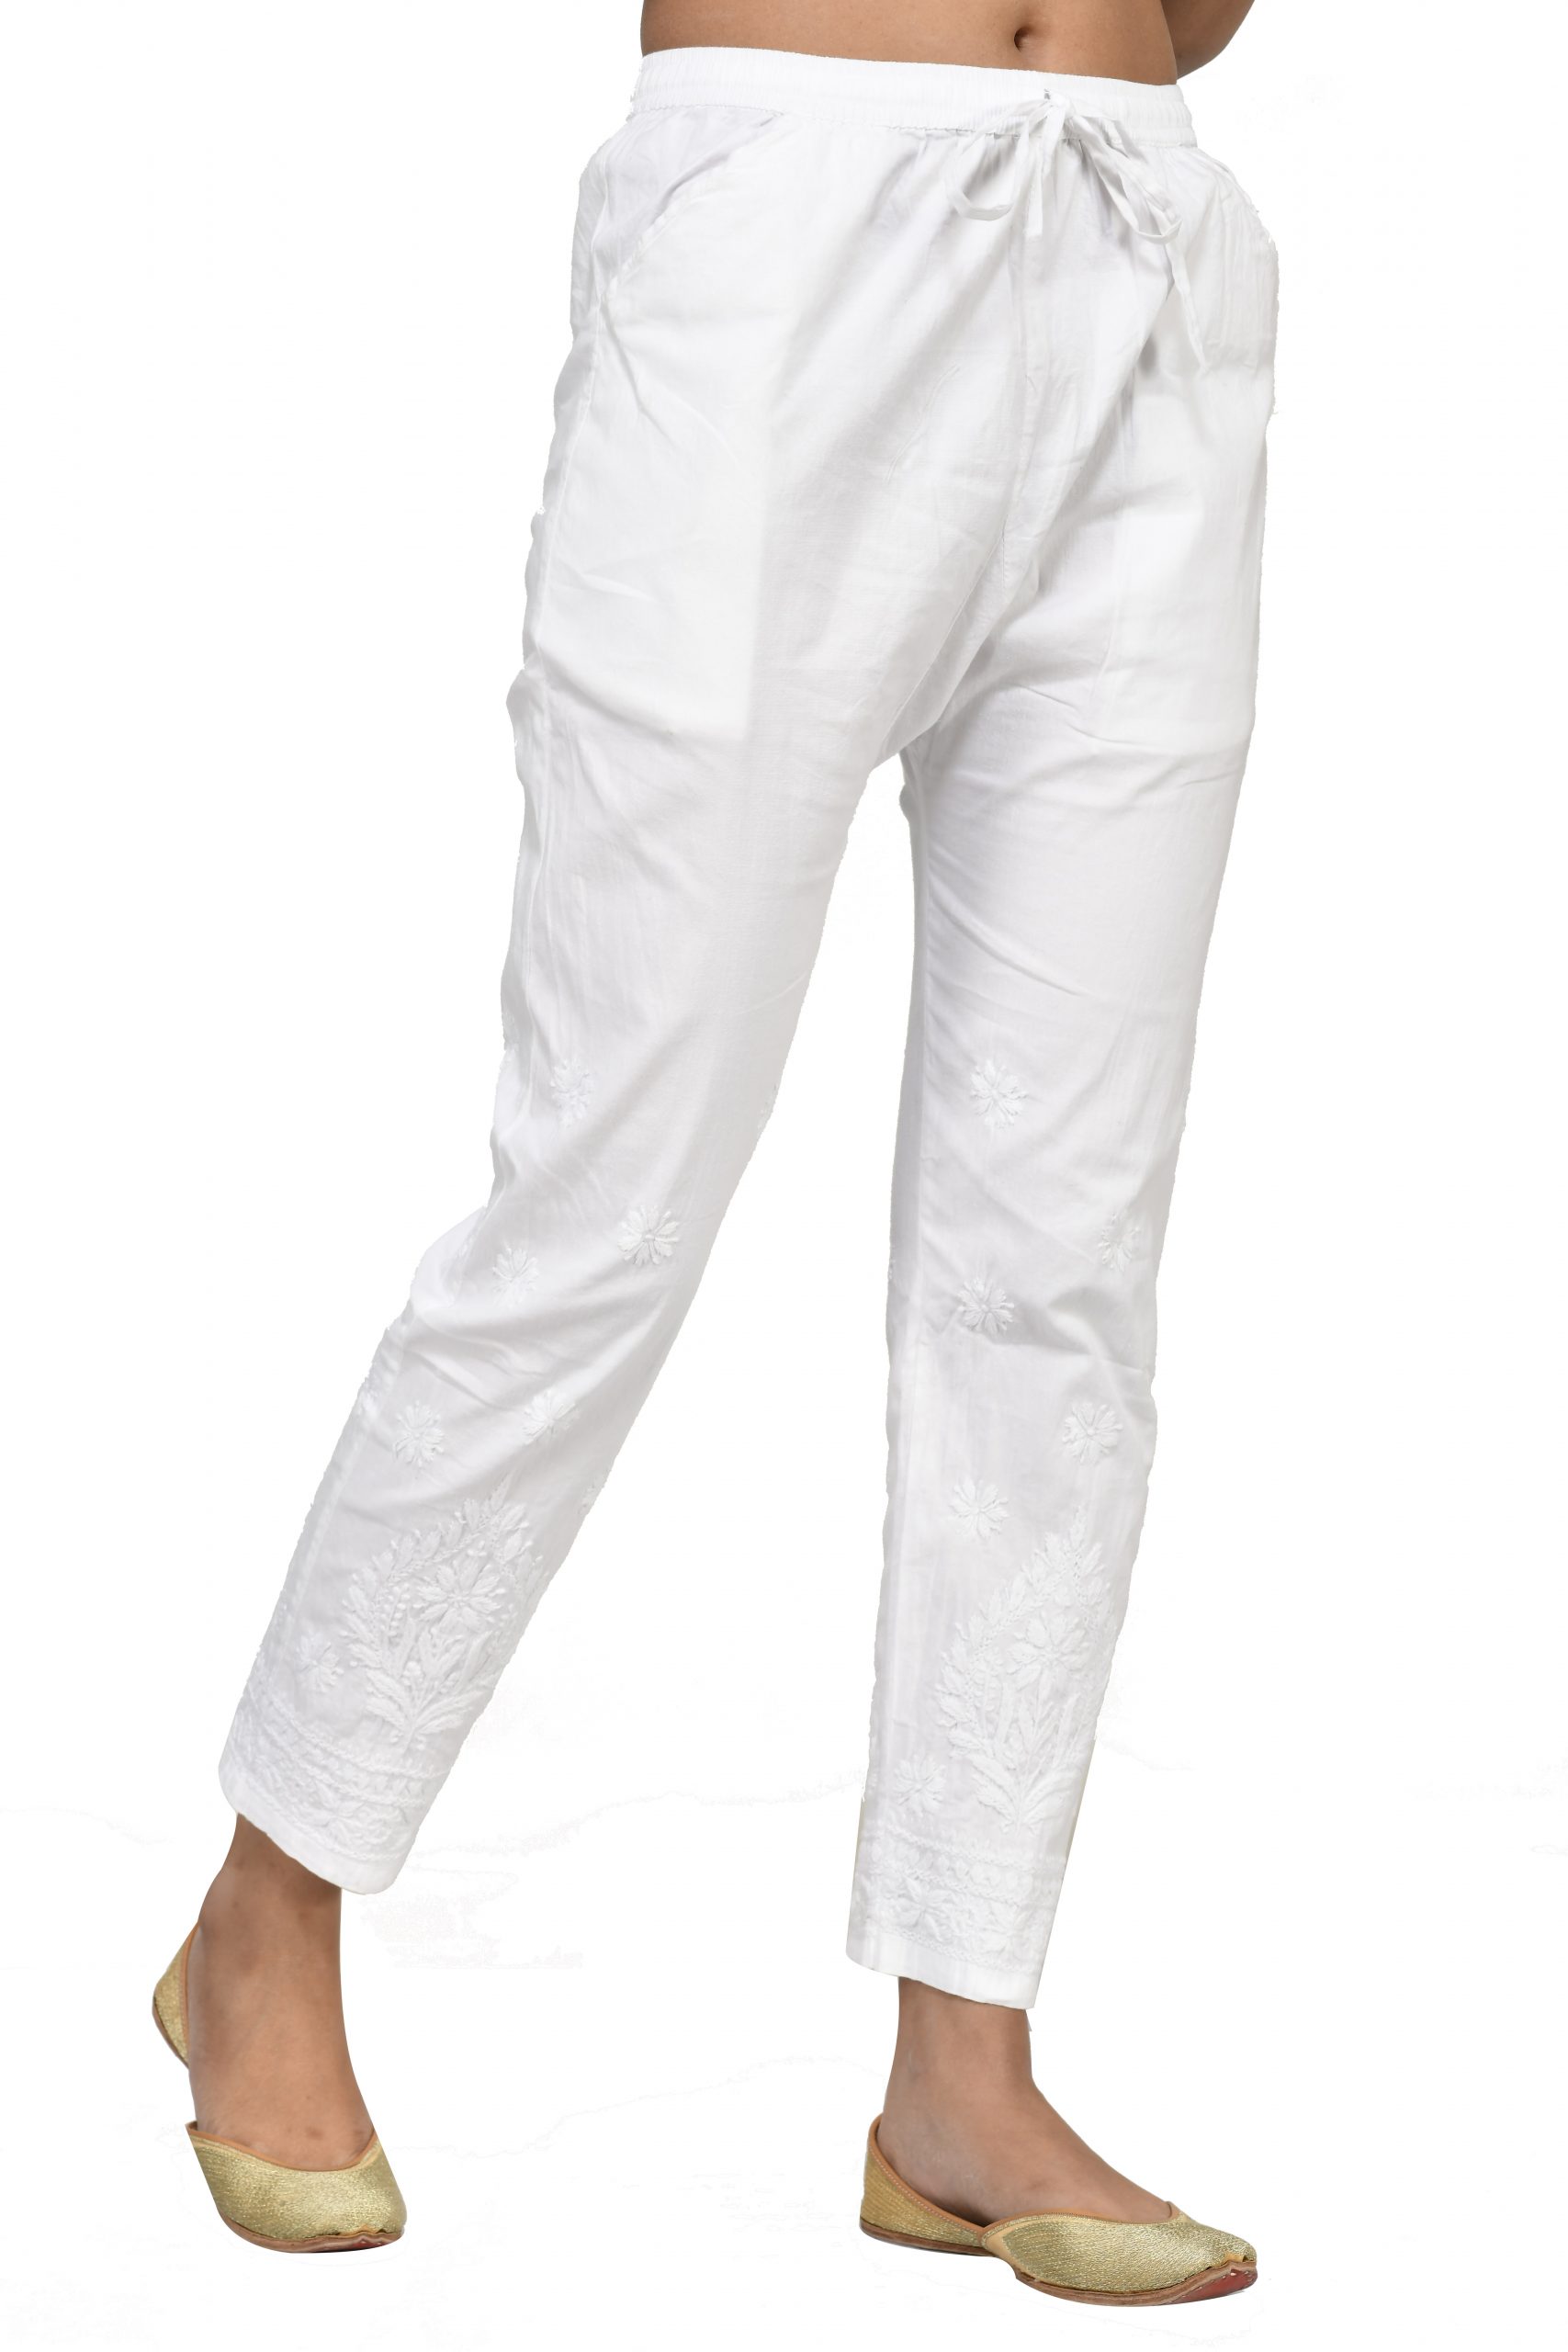 White Harem Pants, Kimonos, and Accessories